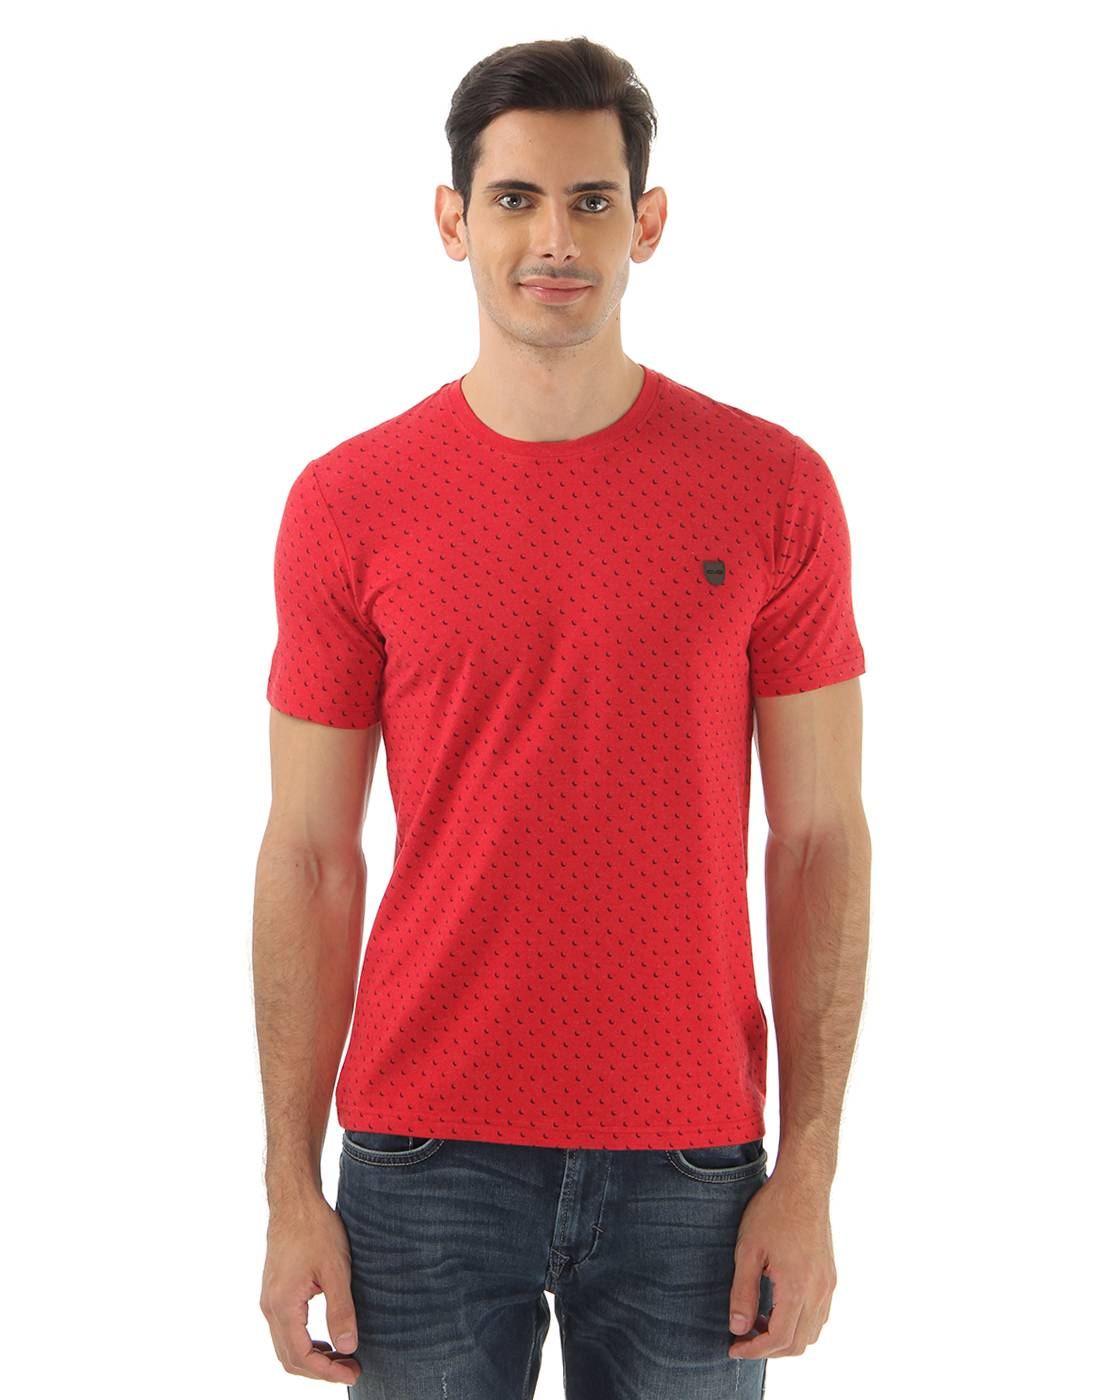 Cloak & Decker by Monte Carlo Men Red T-Shirt